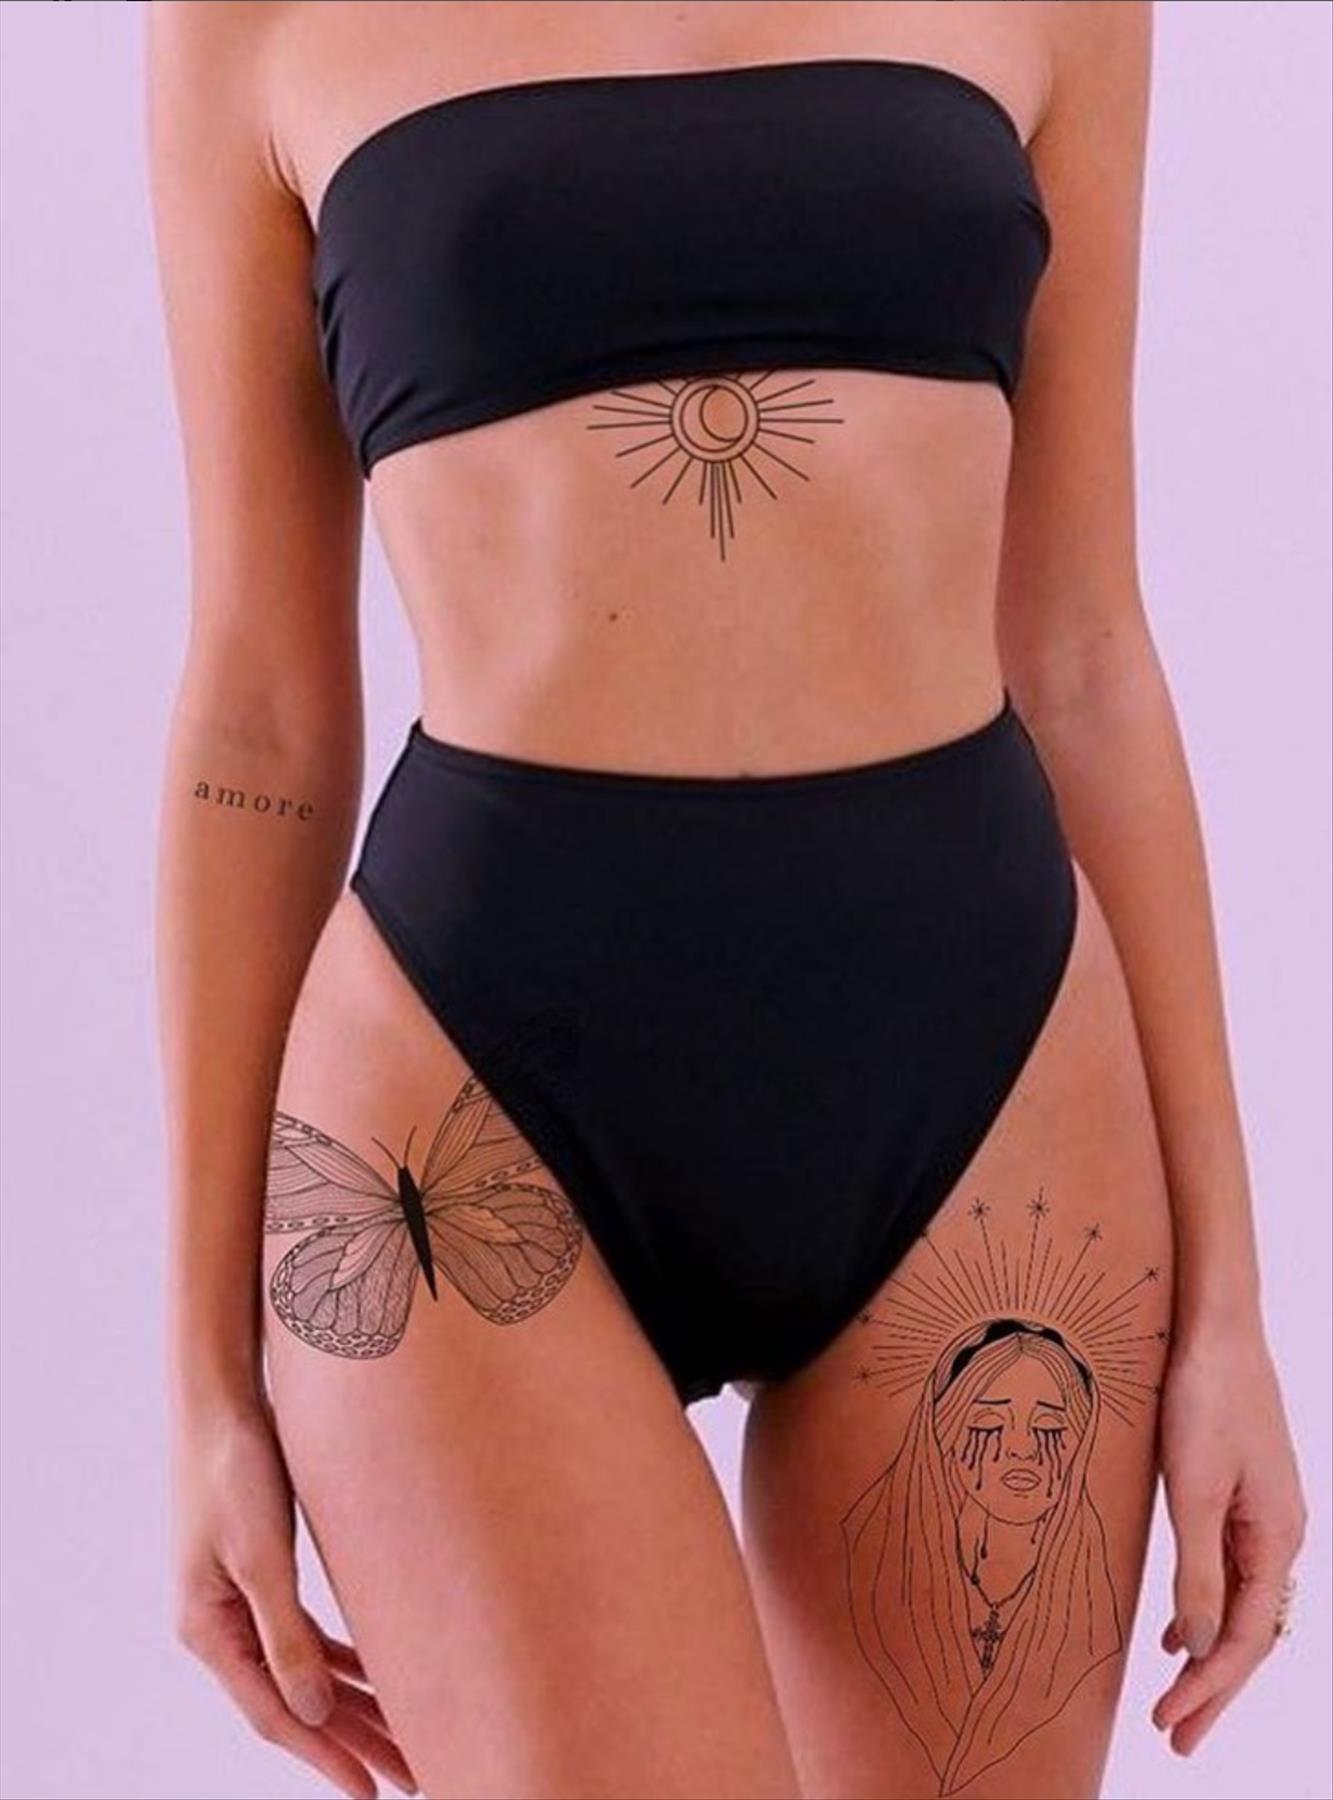 Cool Female Baddie Tattoos Design To Be Hot Girls